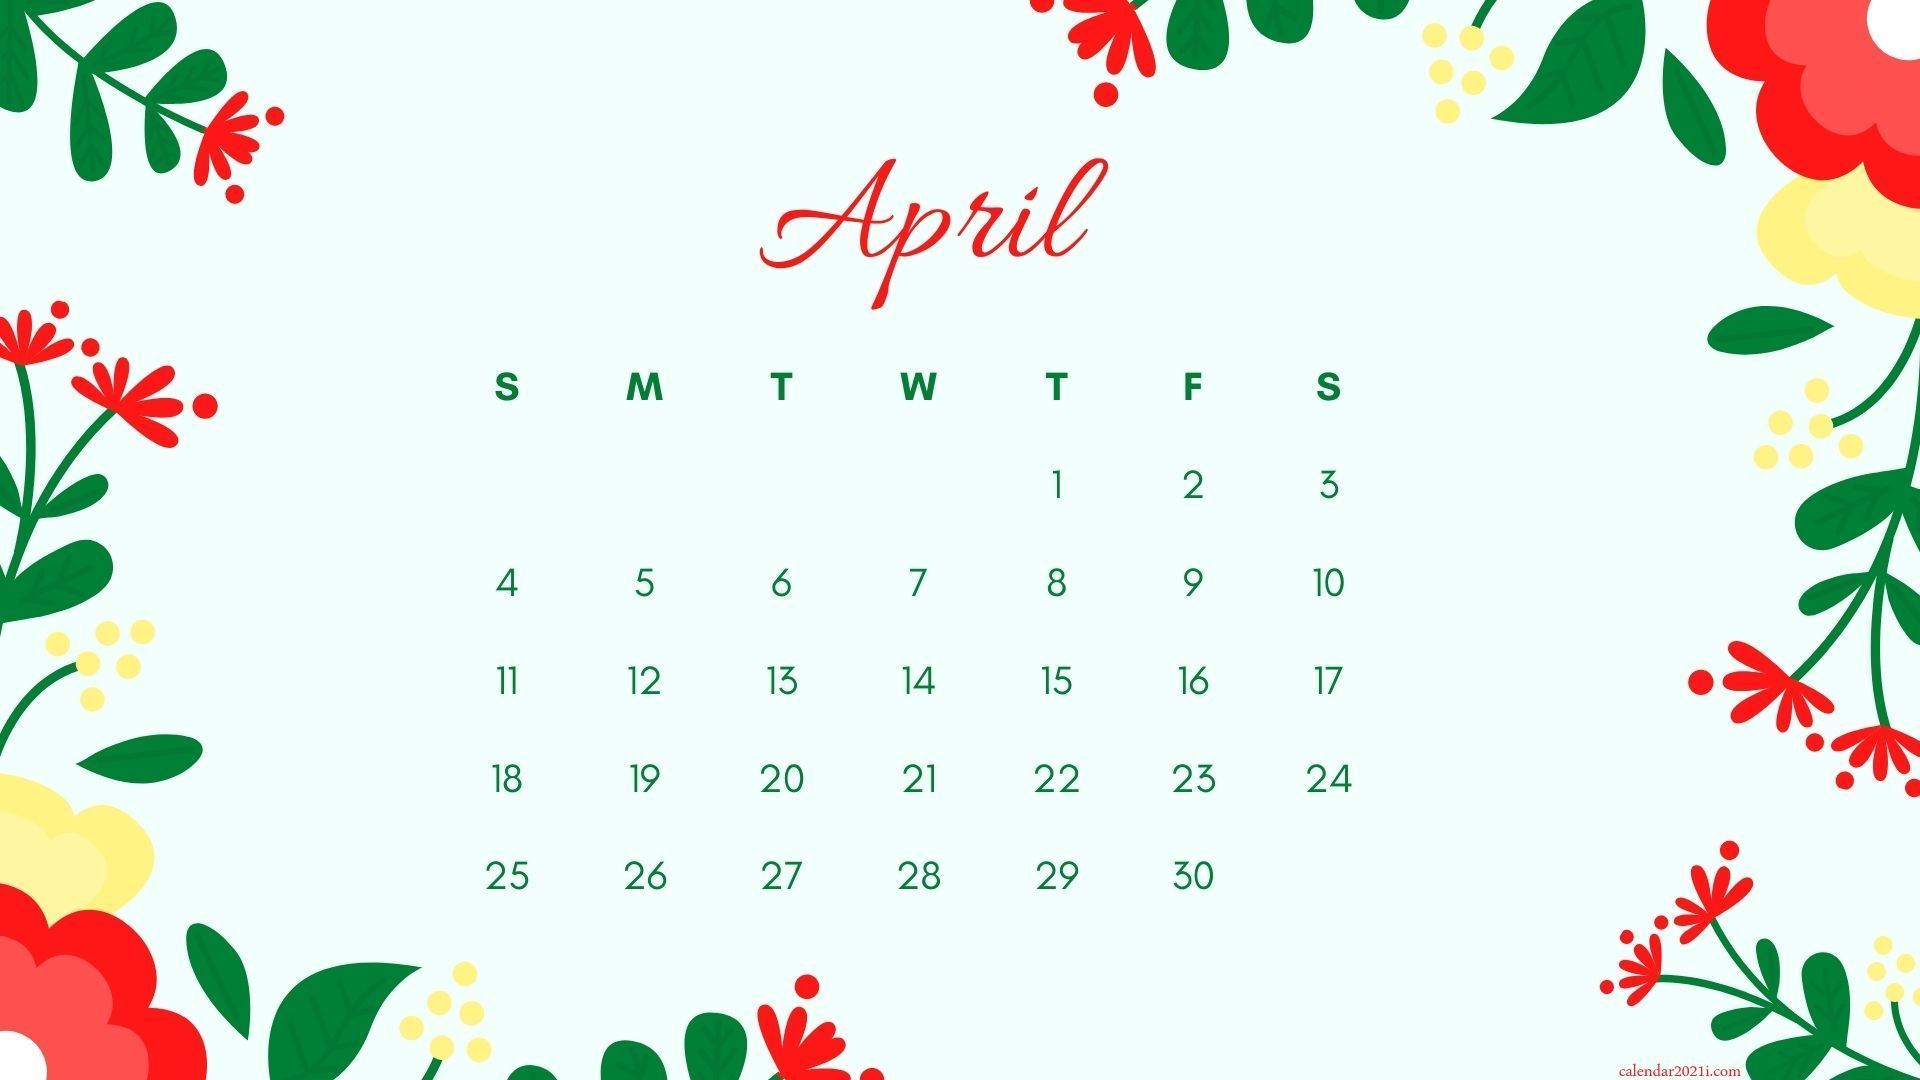 April 2021 Calendar Floral Wallpaper featuring beautiful flowers. Floral wallpaper, 2021 calendar, Calendar wallpaper